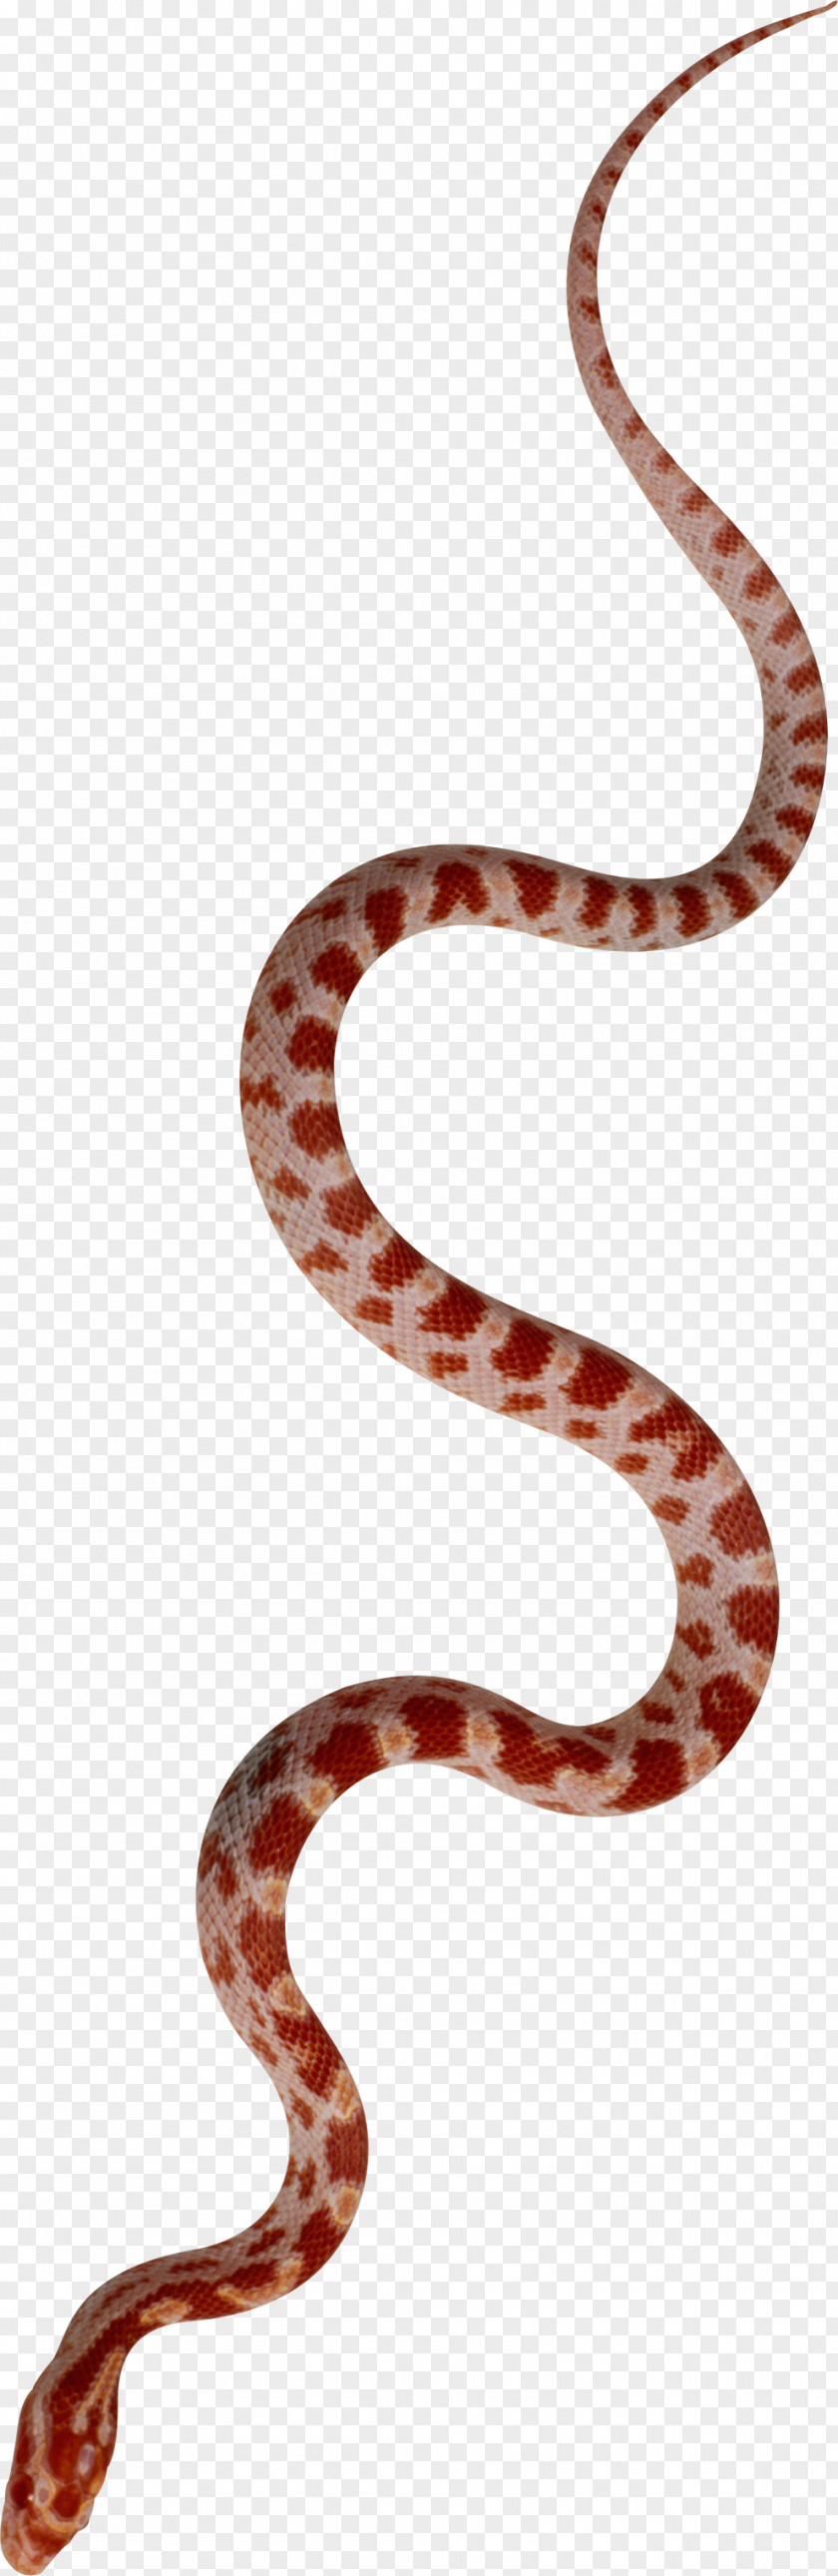 Anaconda Kingsnakes Reptile Vertebrate Colubridae PNG